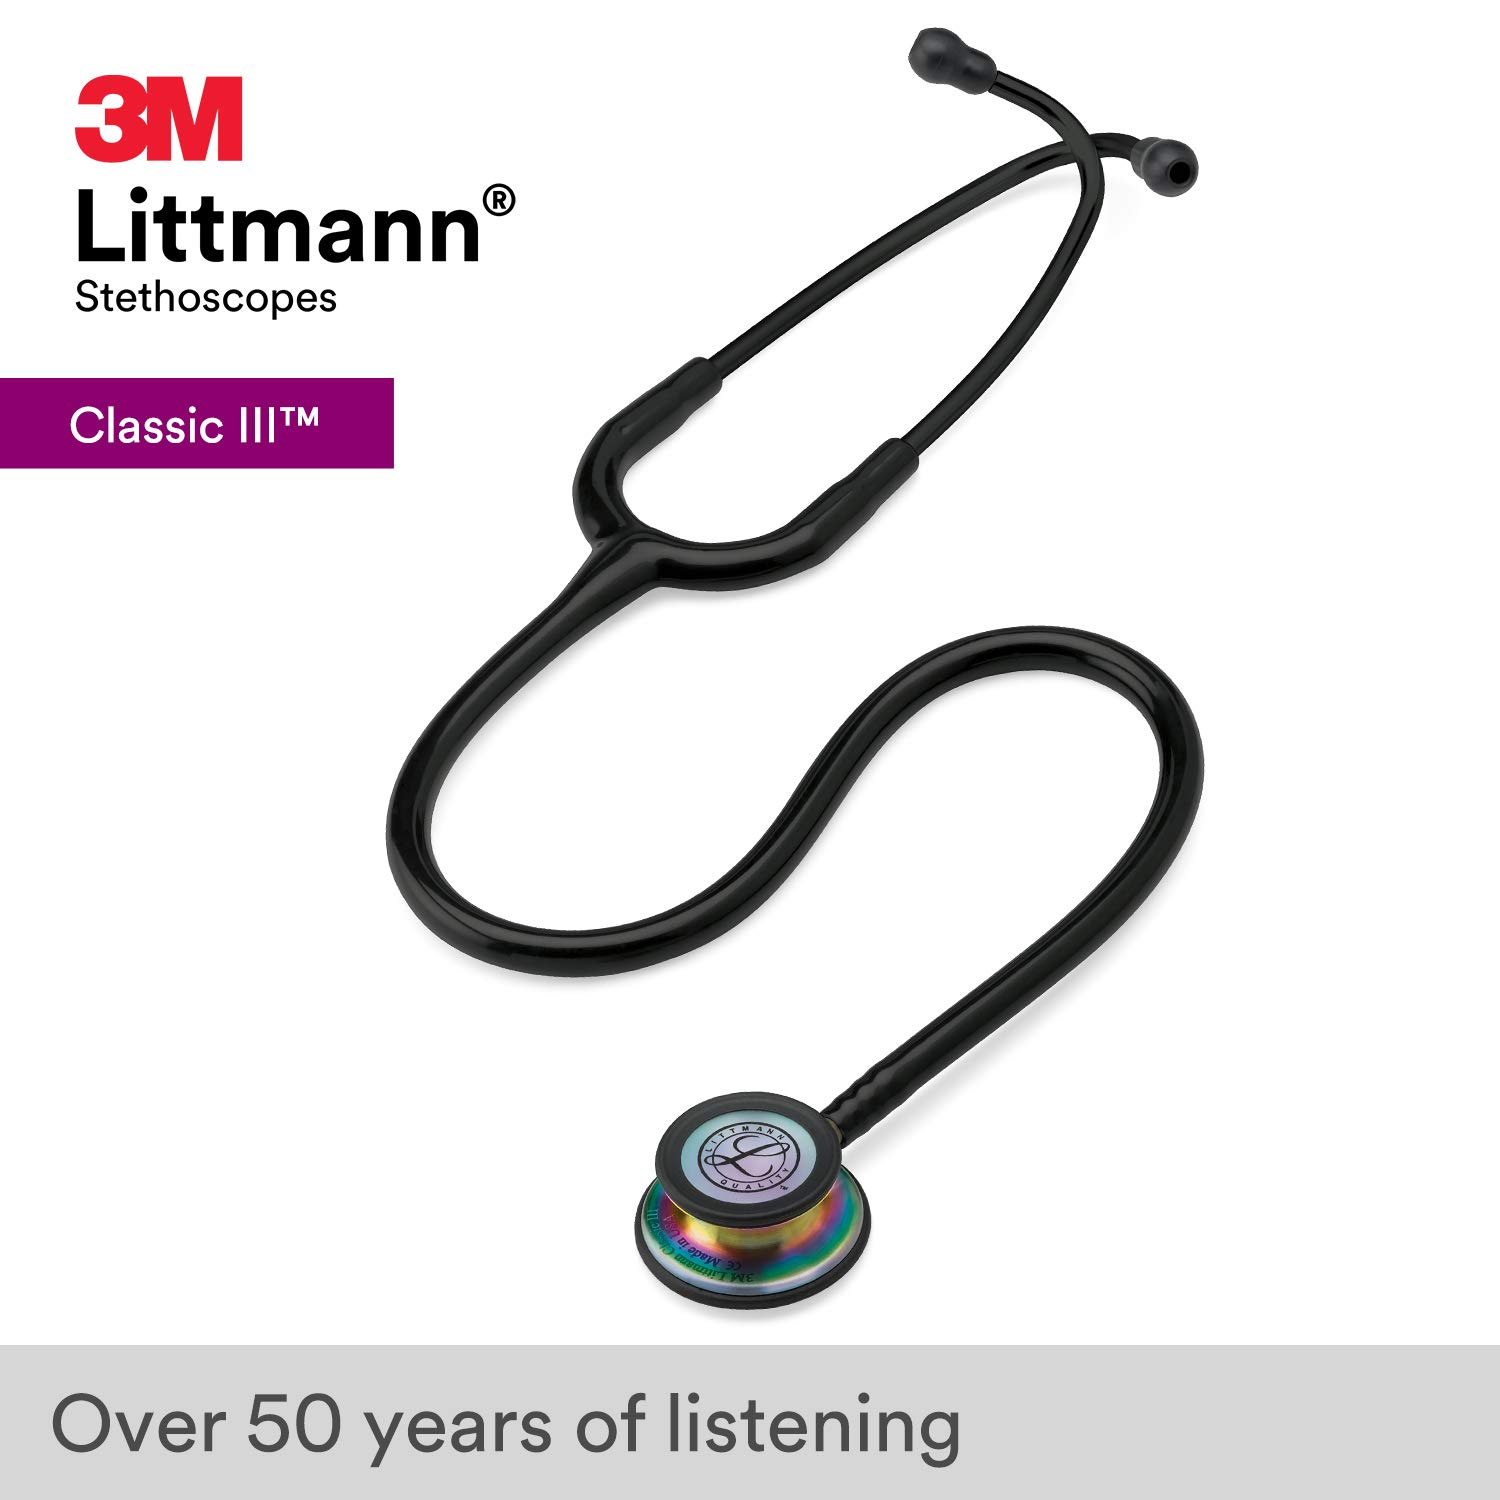 Ống nghe Littmann Classic III TM màu Black Edition Chestpiece Special 5803